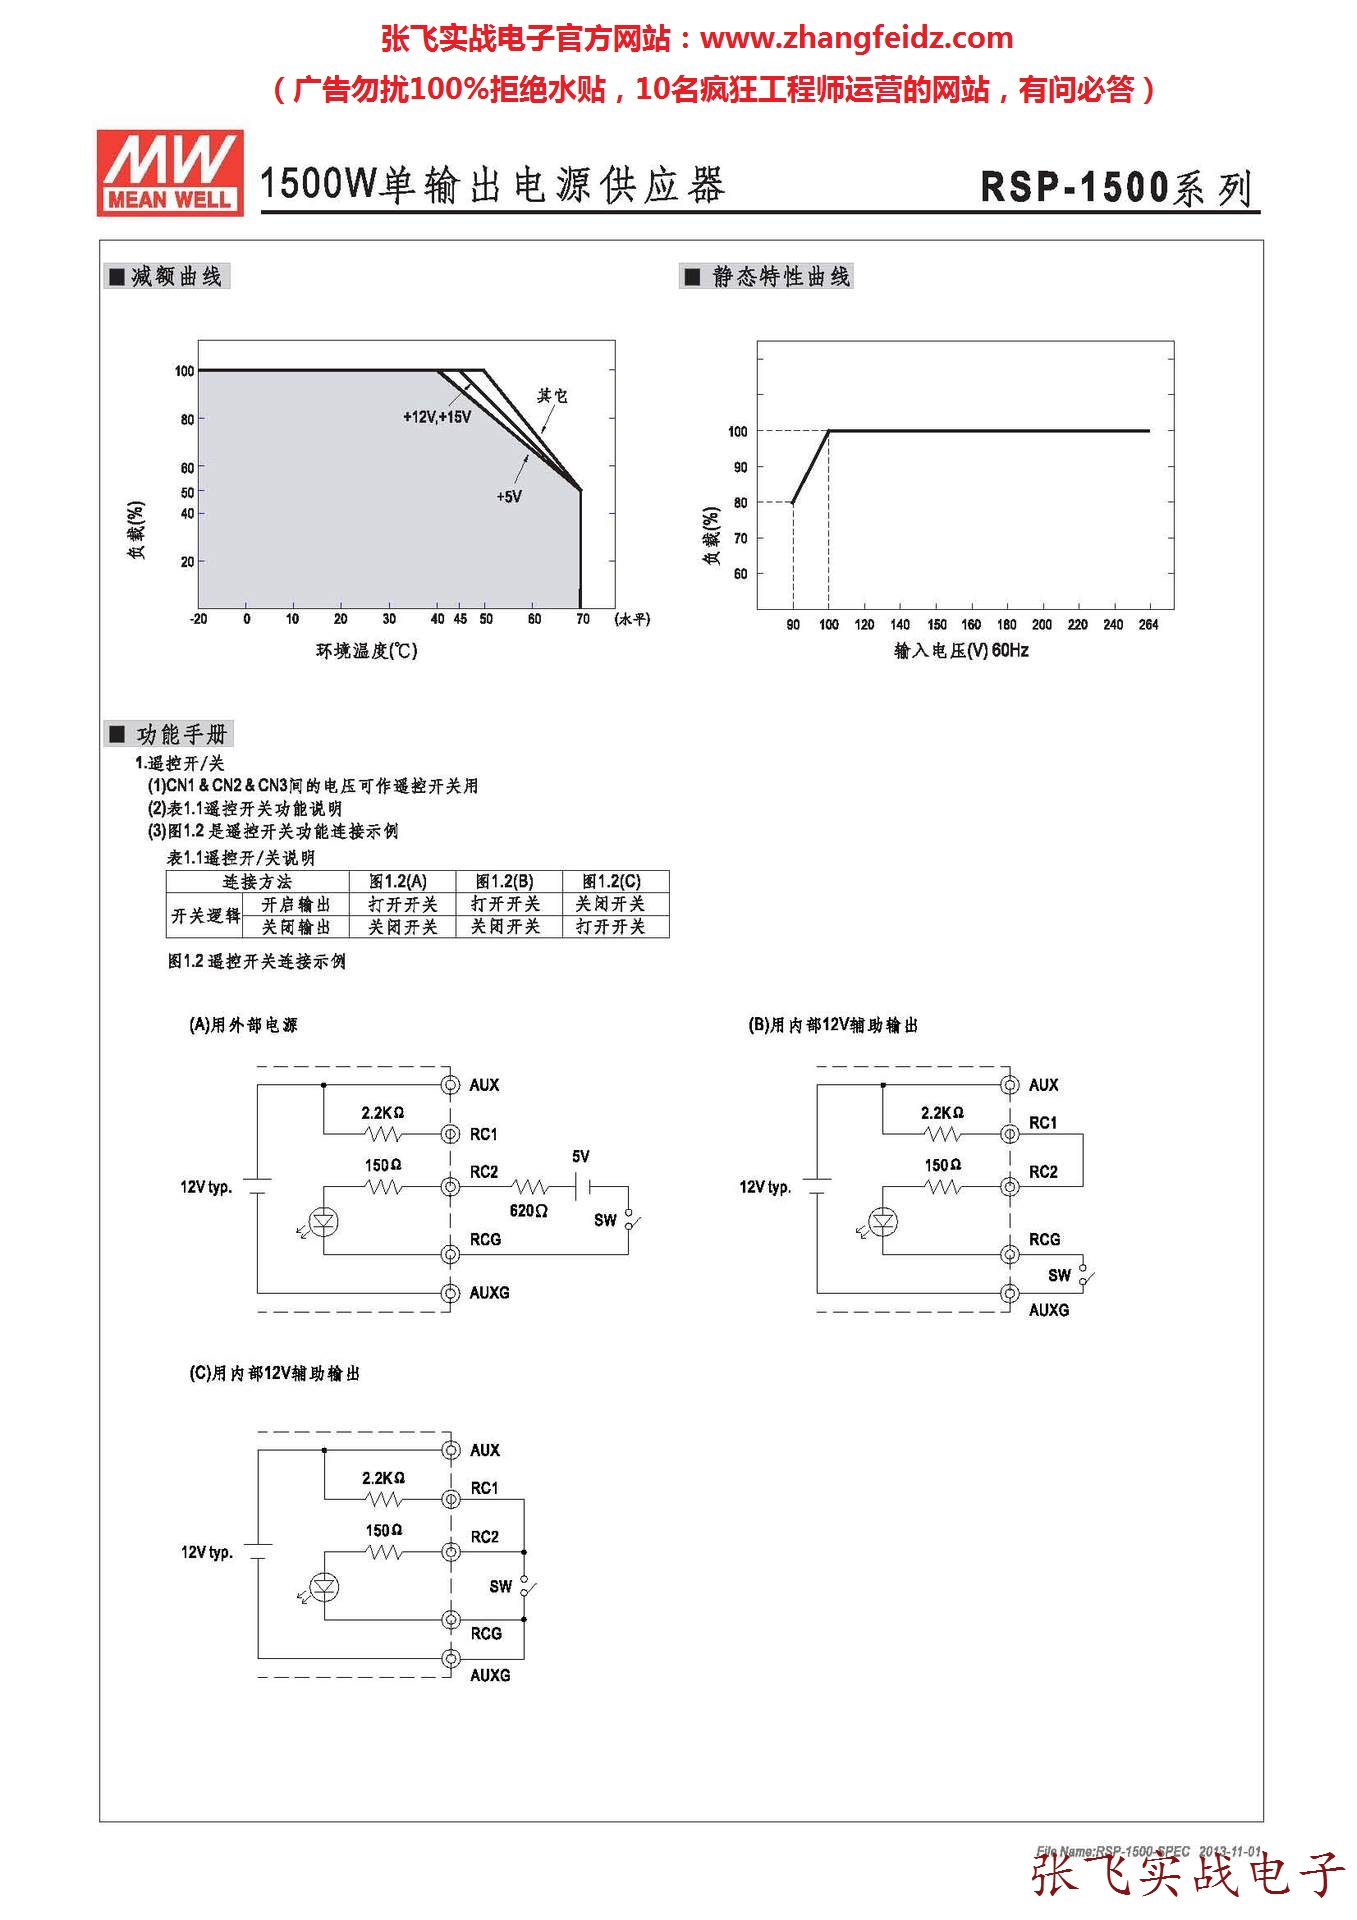 RSP-1500系列降额曲线和功能手册.jpg